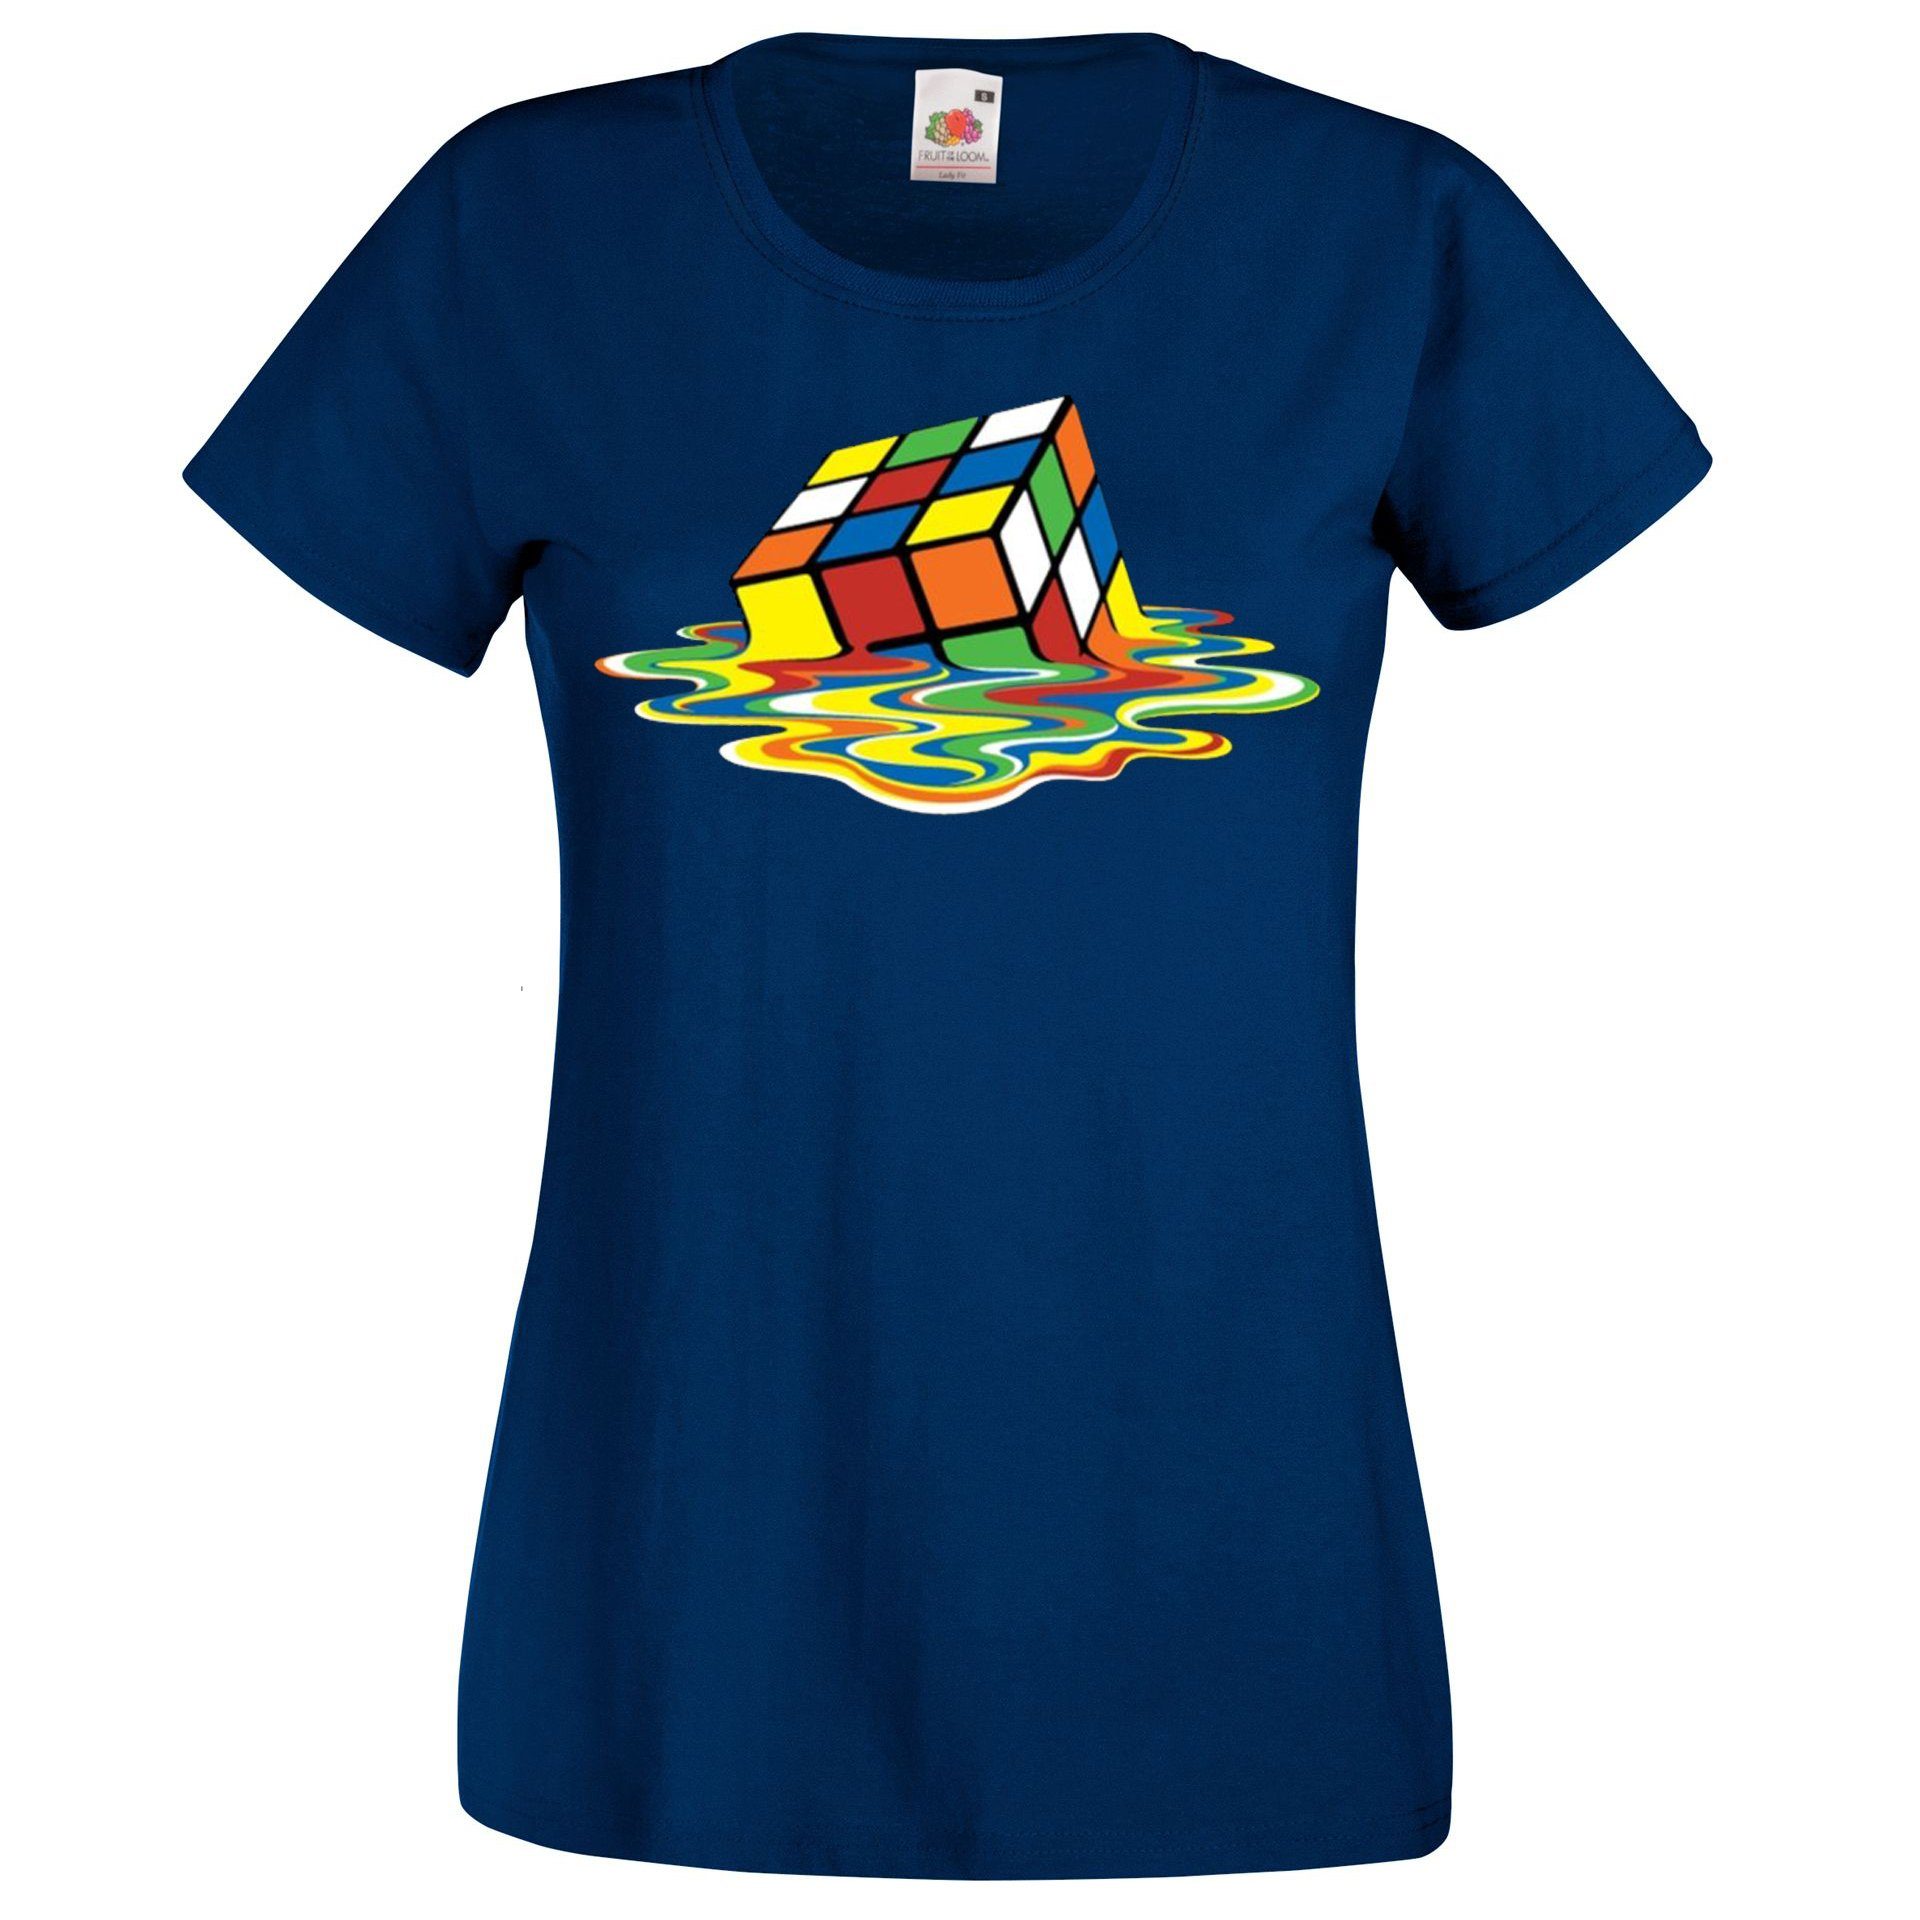 T-Shirt Damen Frontprint Shirt Zauberwürfel Navyblau witzigem mit Youth Designz